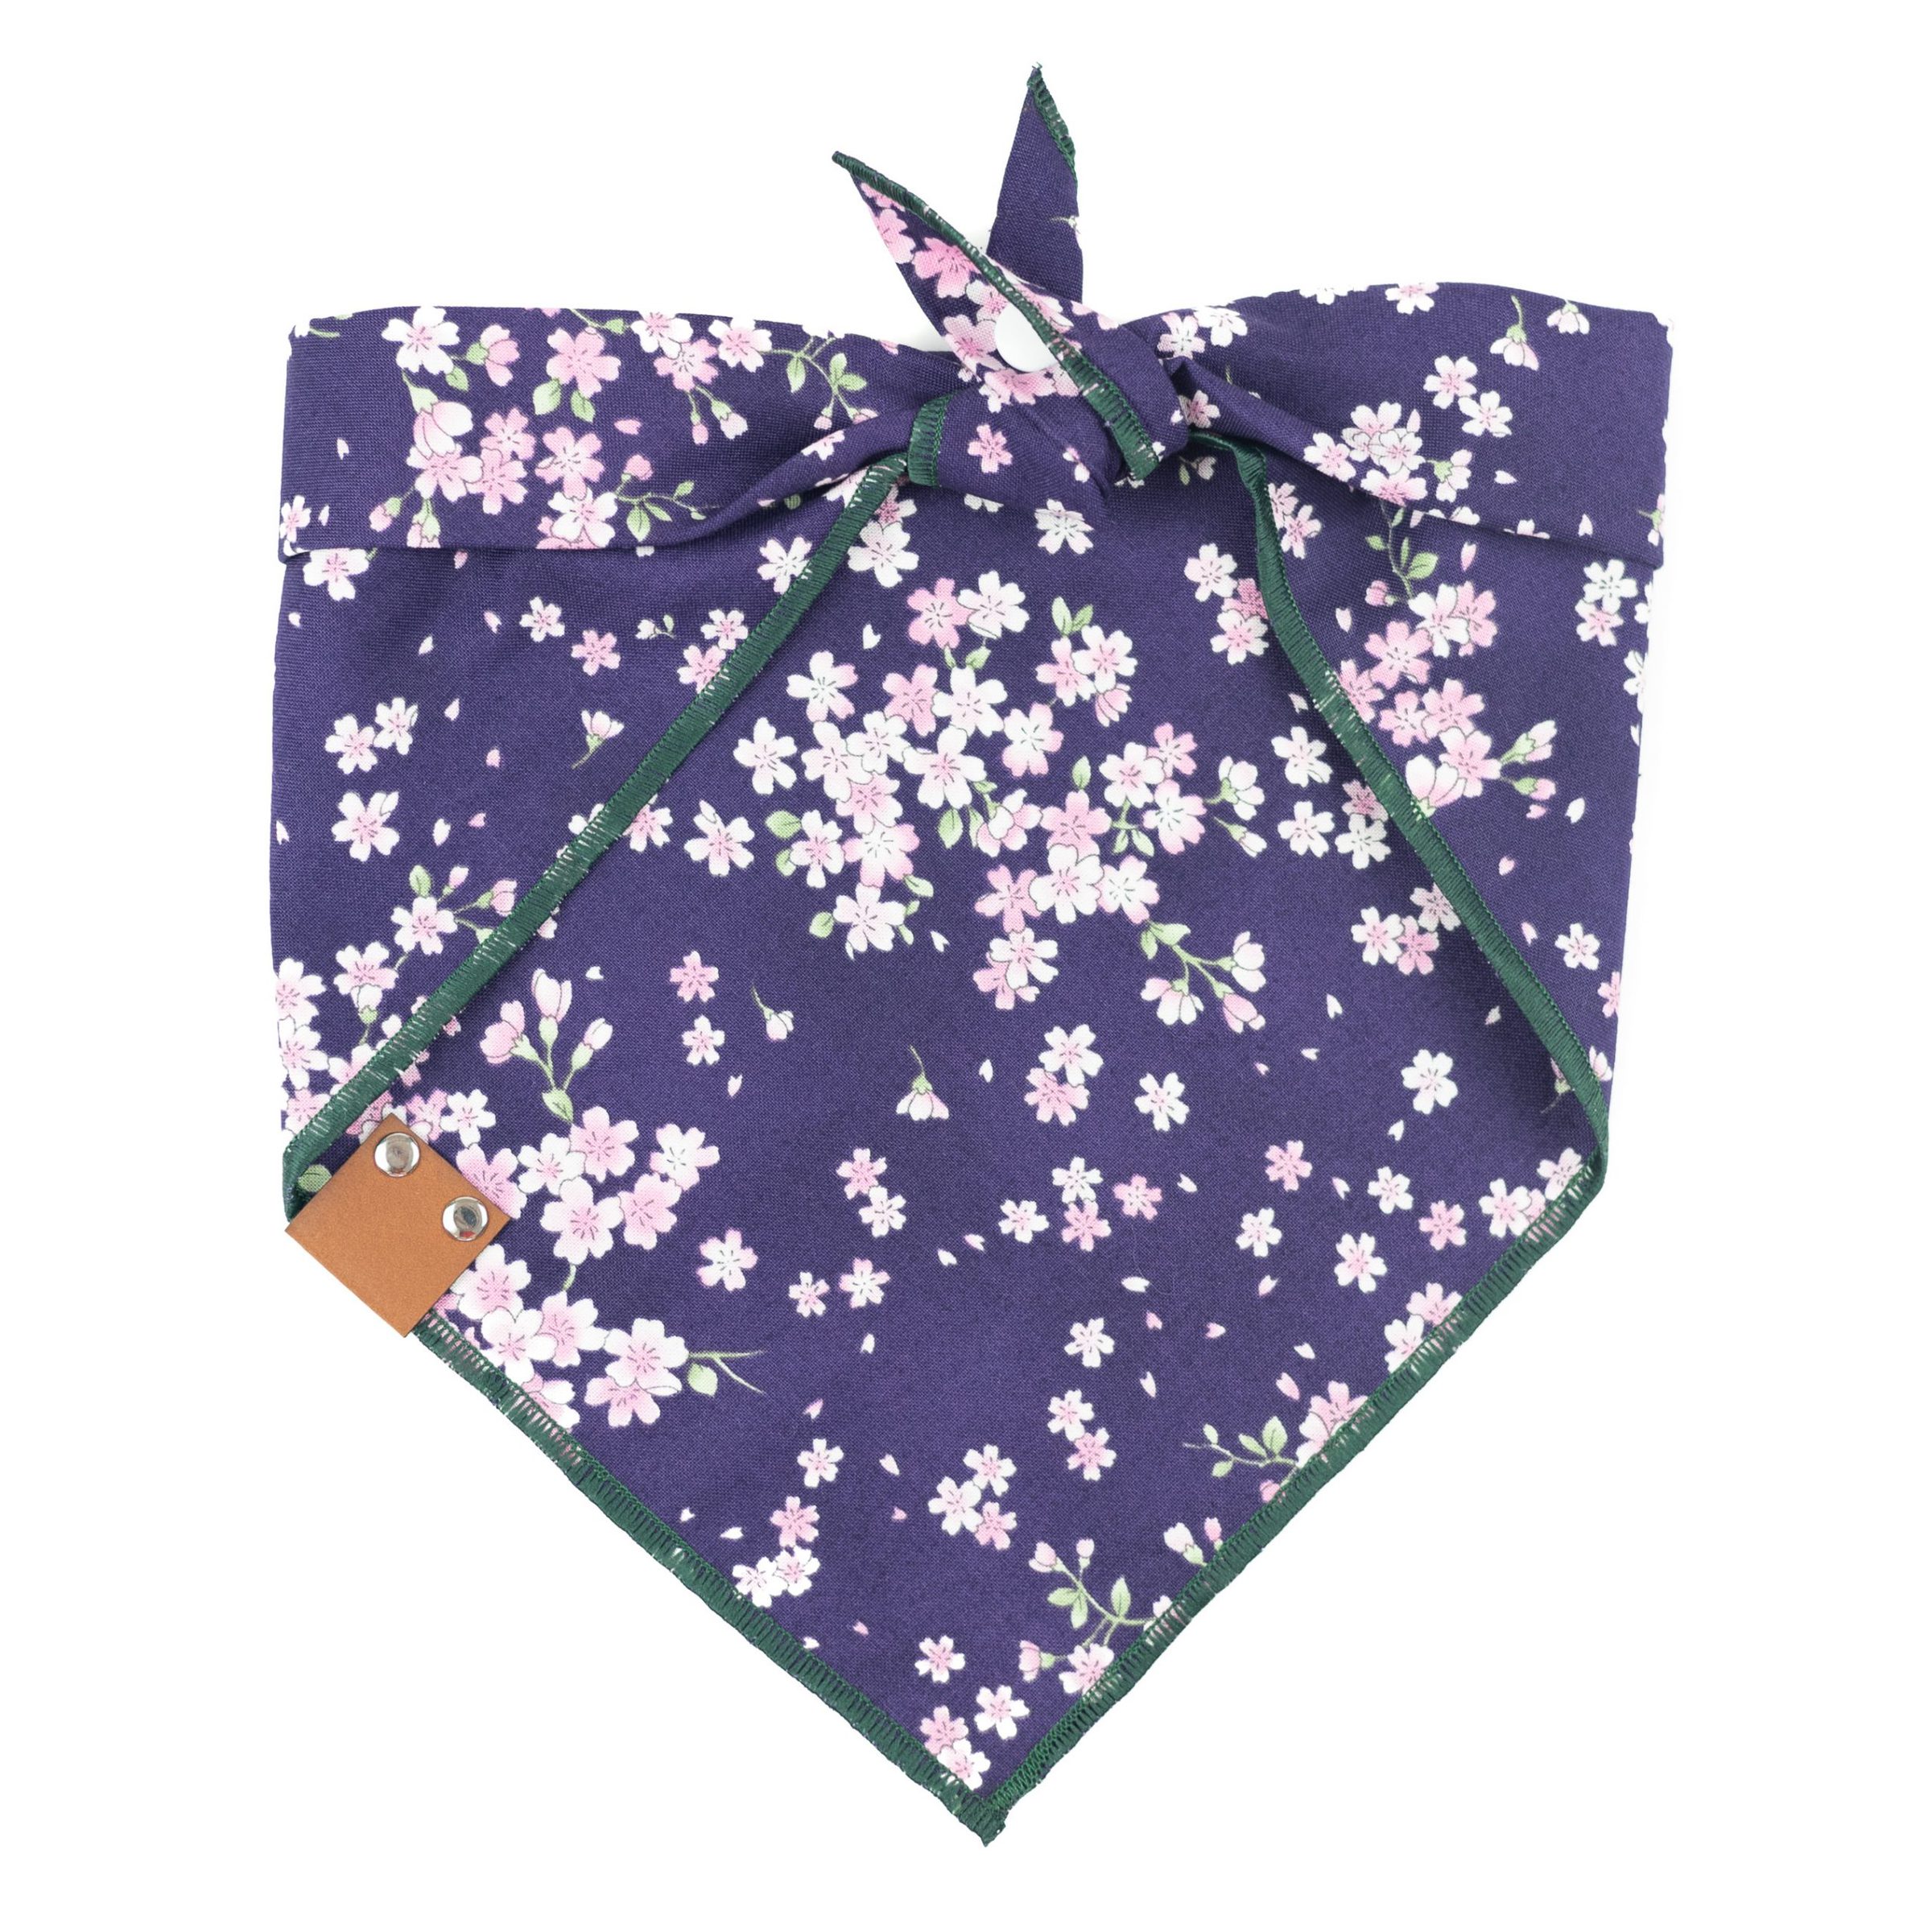 Thalia dog bandana with purple background and pink cherry blossoms